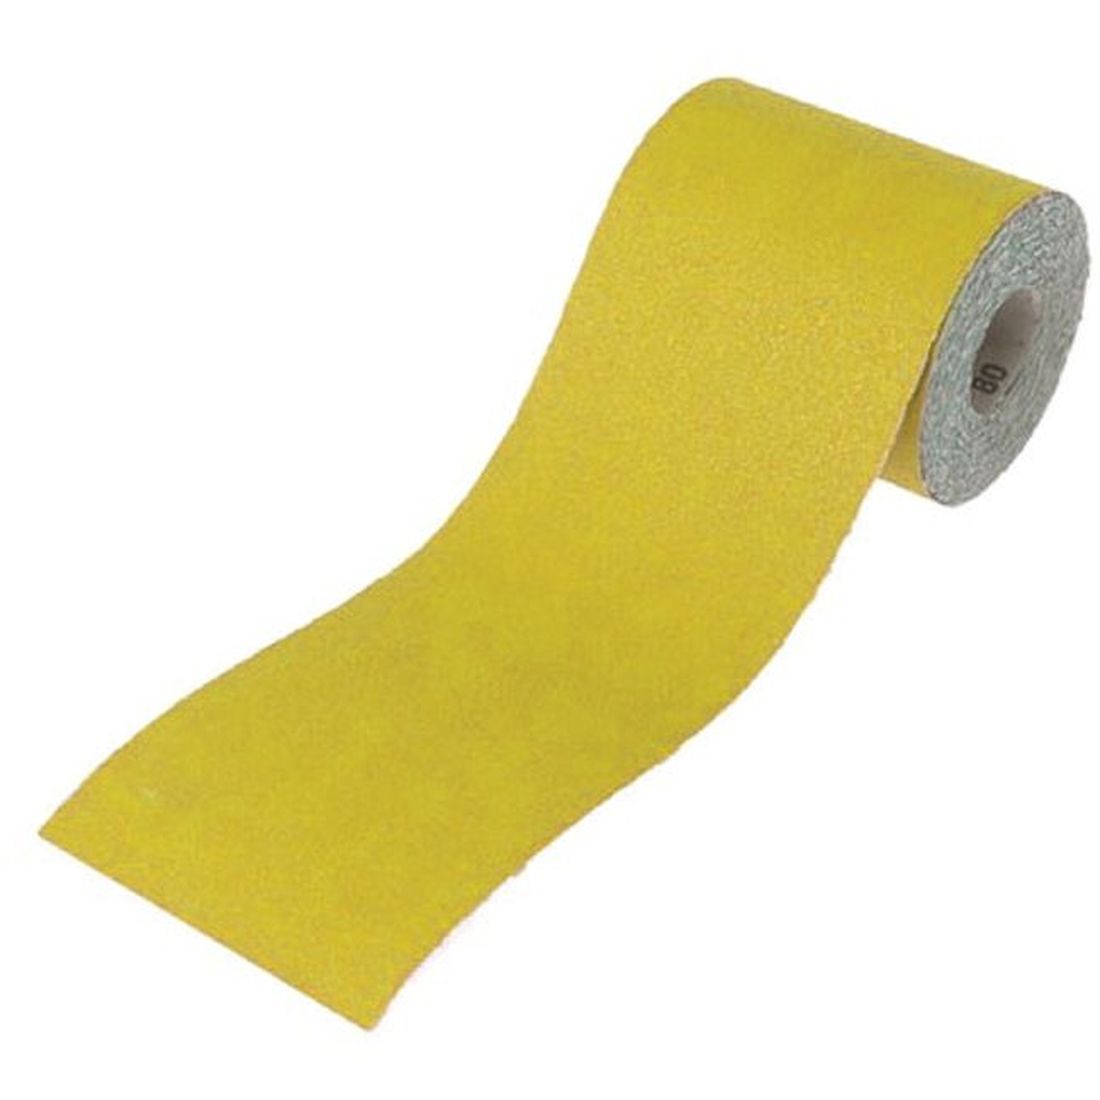 Faithfull Aluminium Oxide Sanding Paper Roll Yellow 115mm x 50m 60G                       